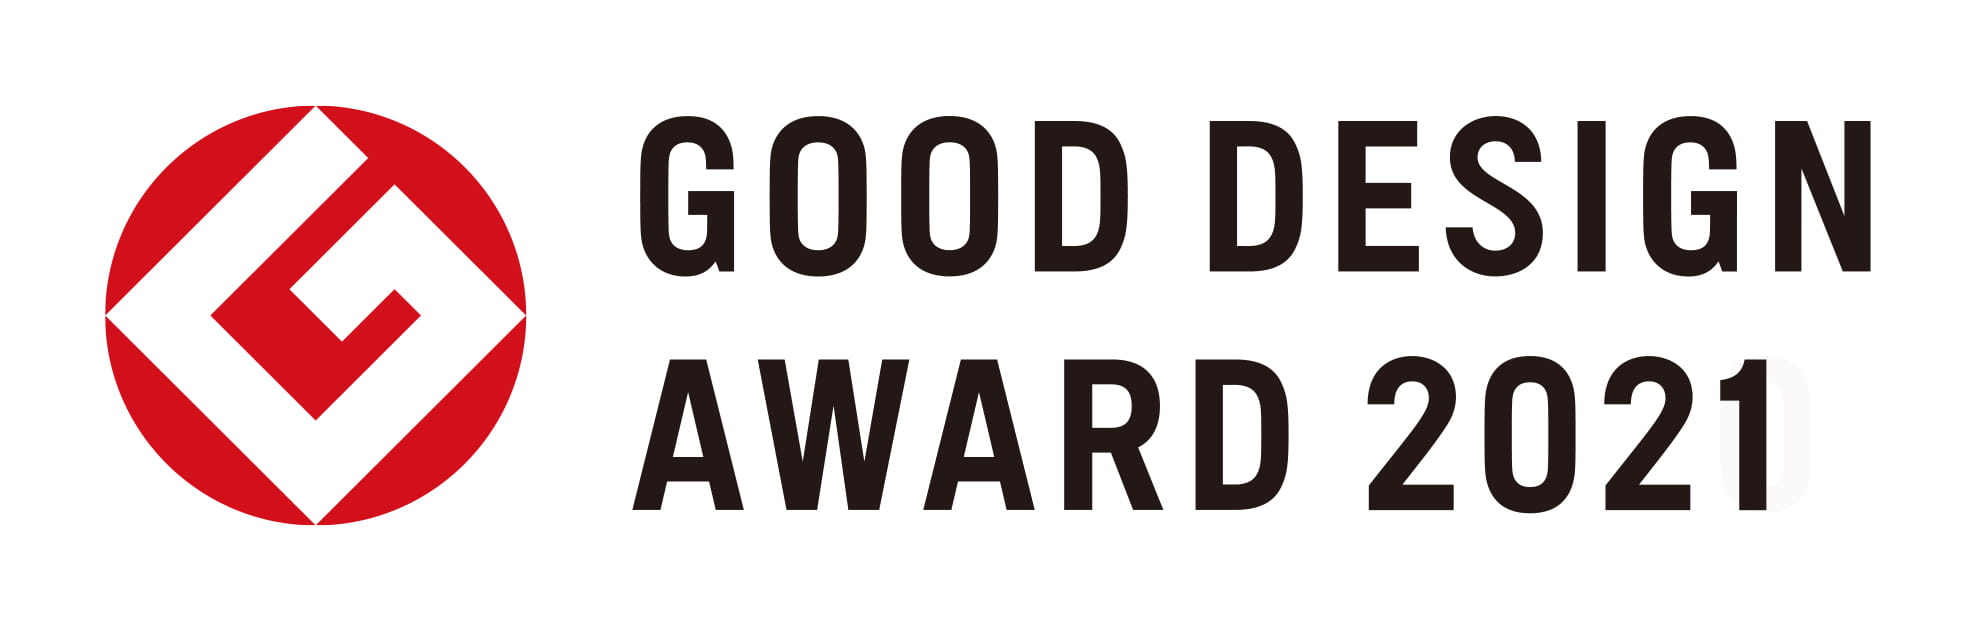 Good design Award Logo 2021 B